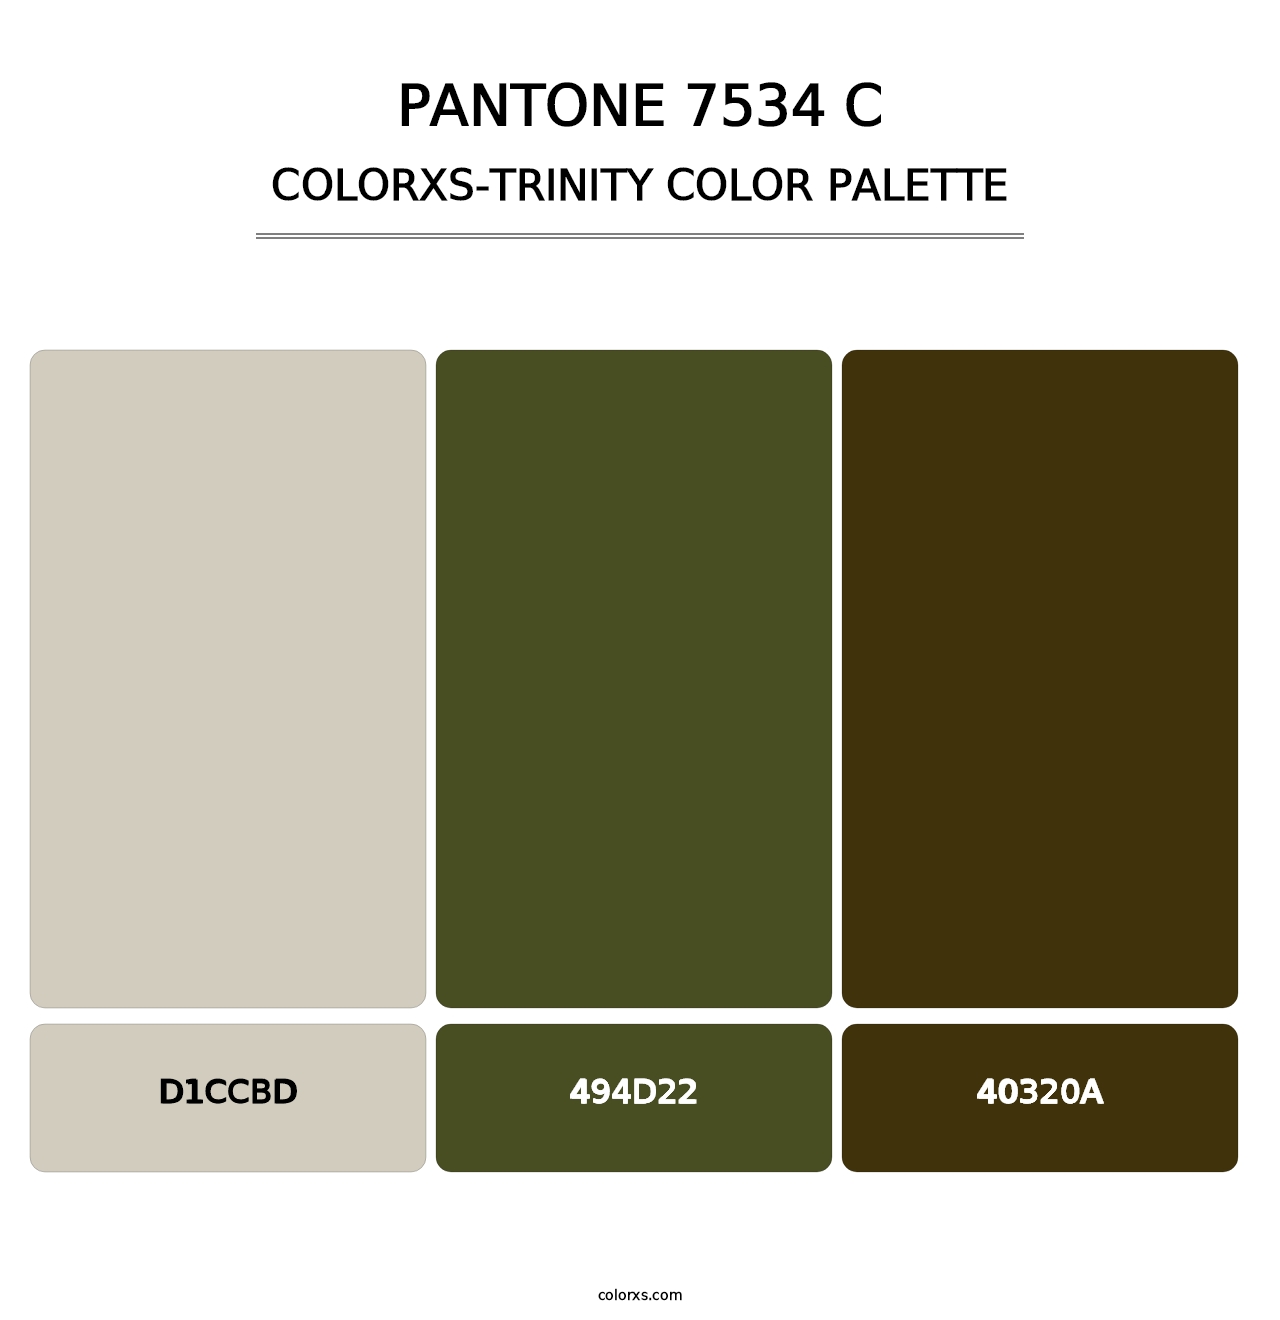 PANTONE 7534 C - Colorxs Trinity Palette